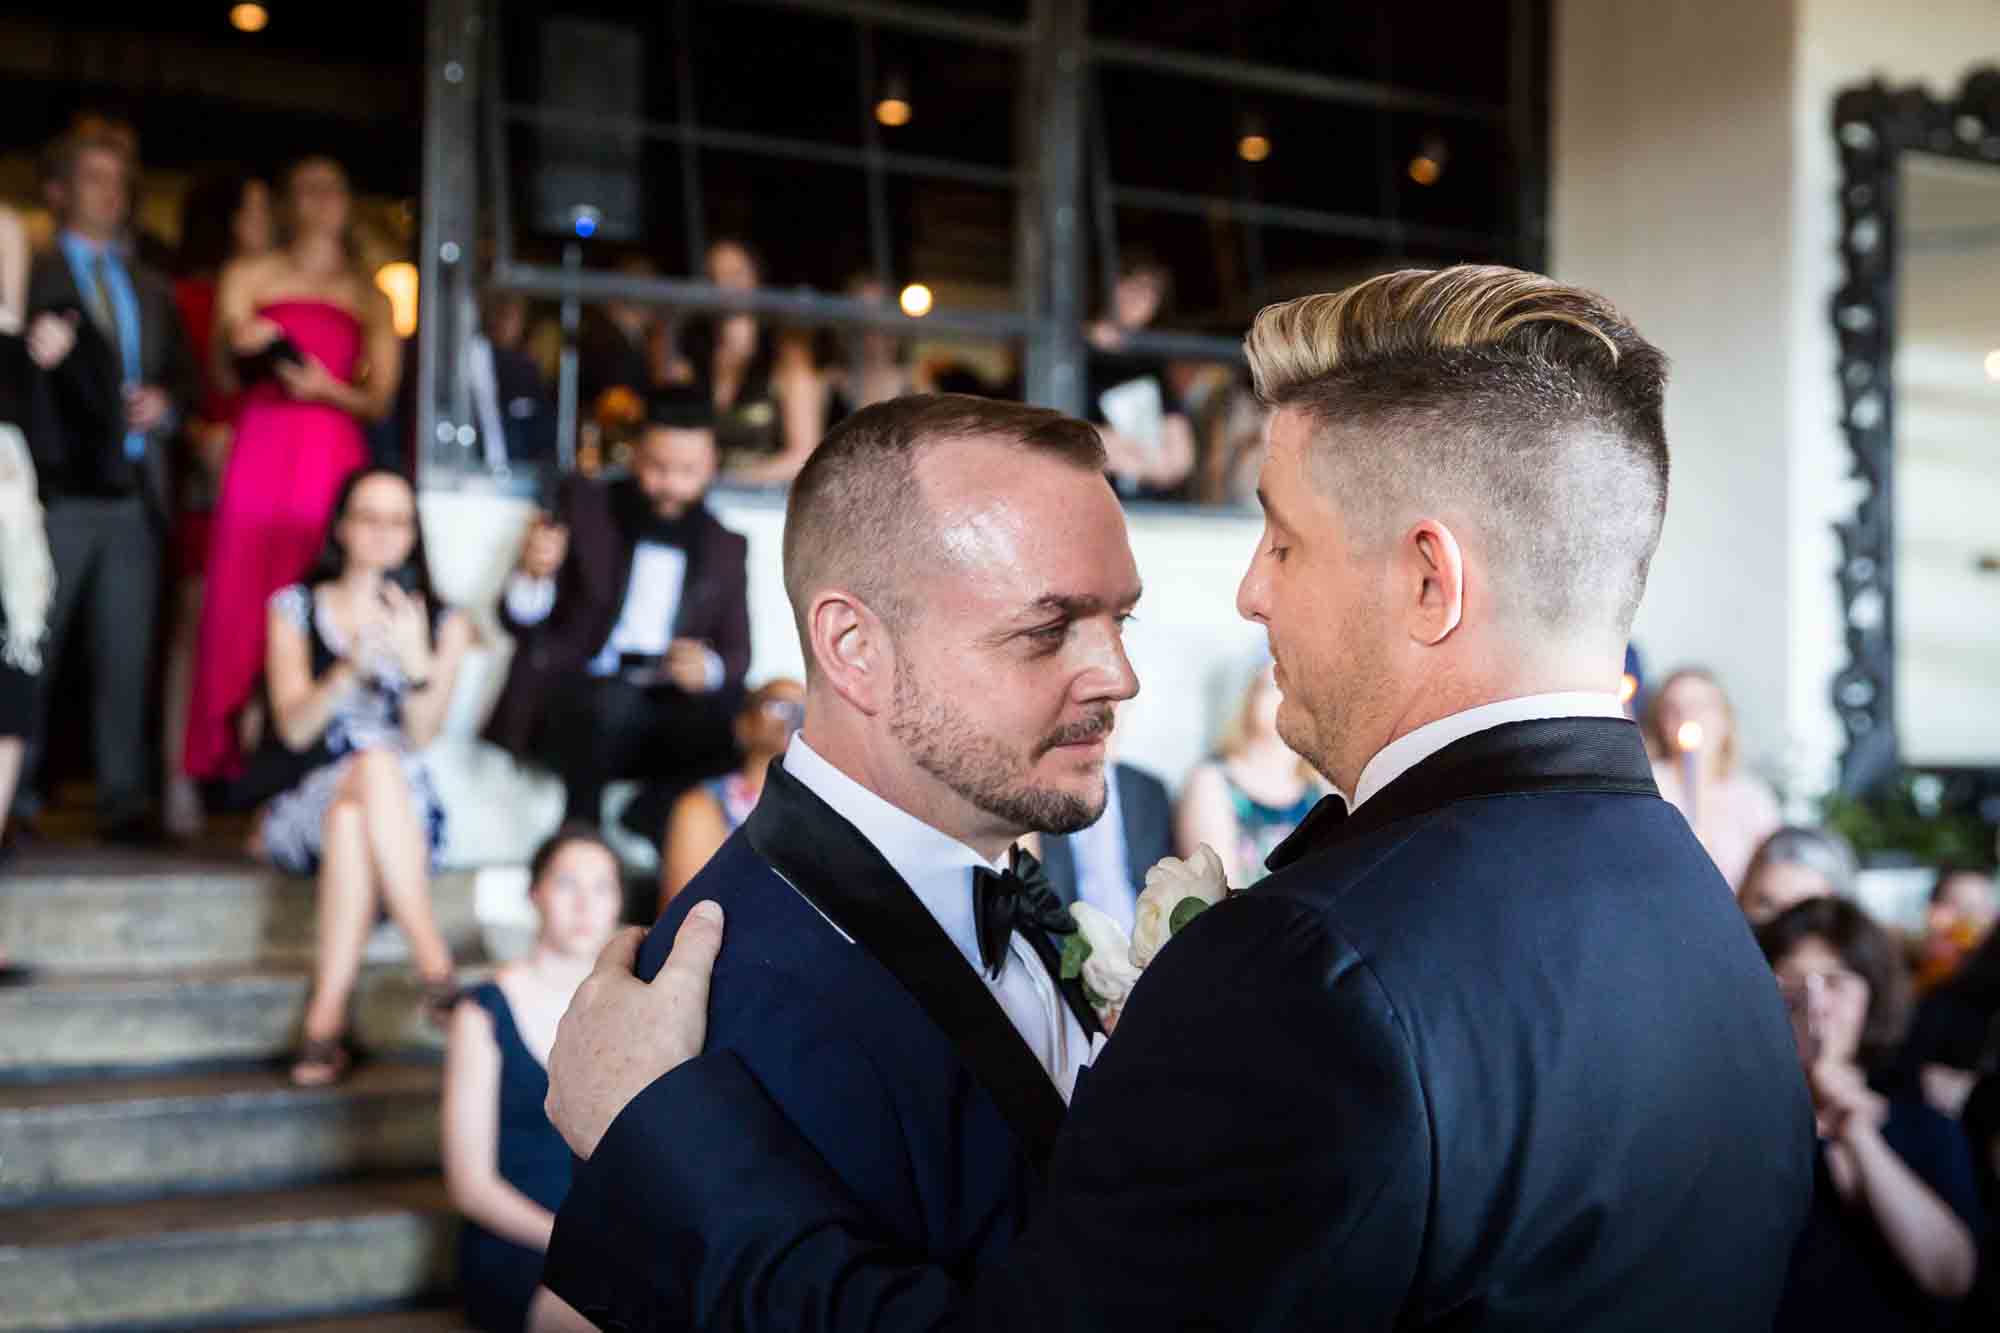 First dance at a same sex wedding celebration in Washington DC